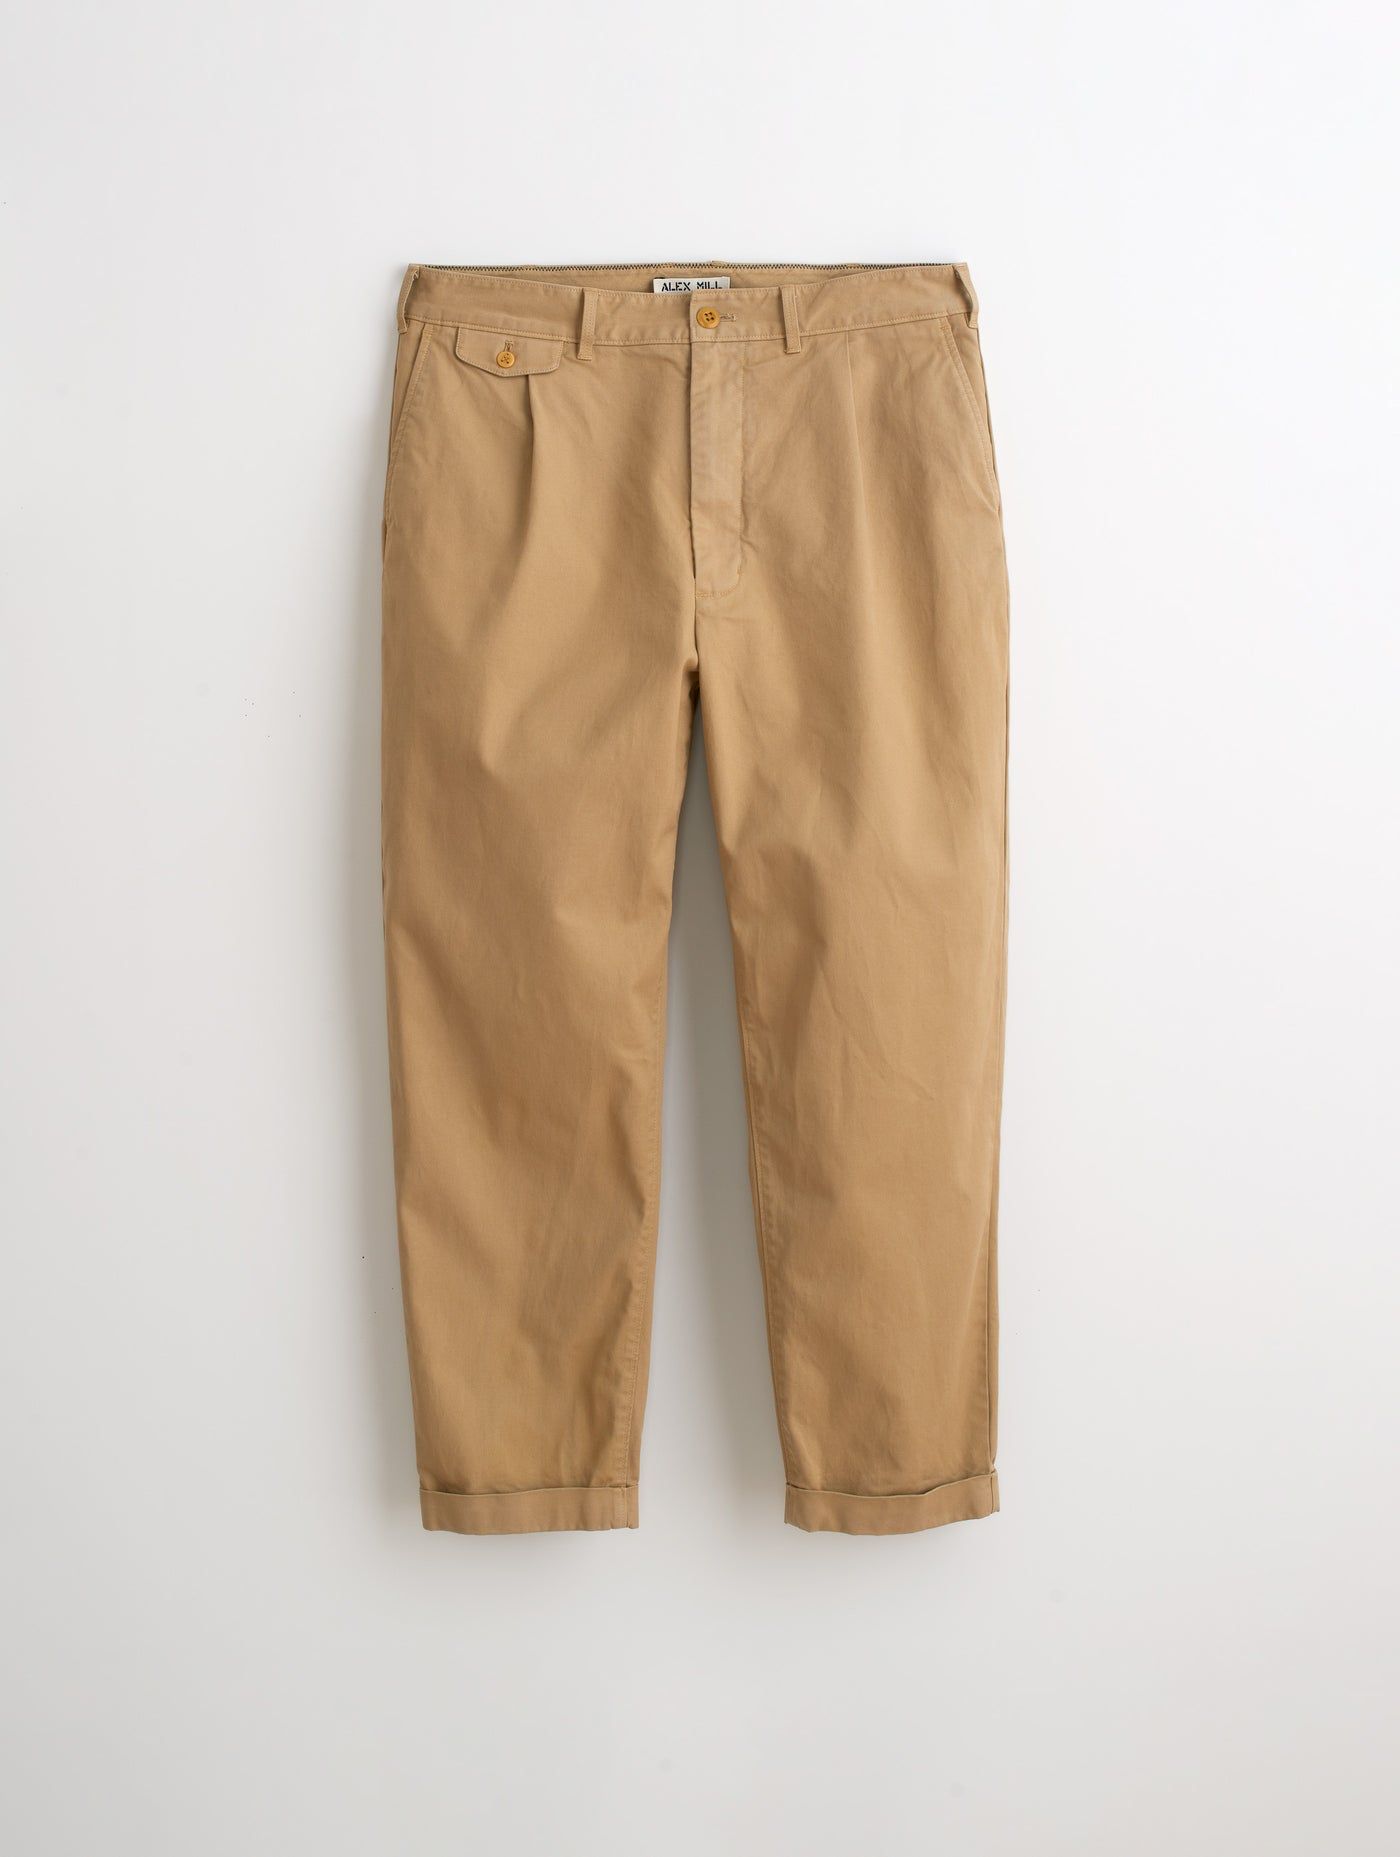 GAP | Pants | Gap 36x3 Mens Skinny Khaki Pants | Poshmark